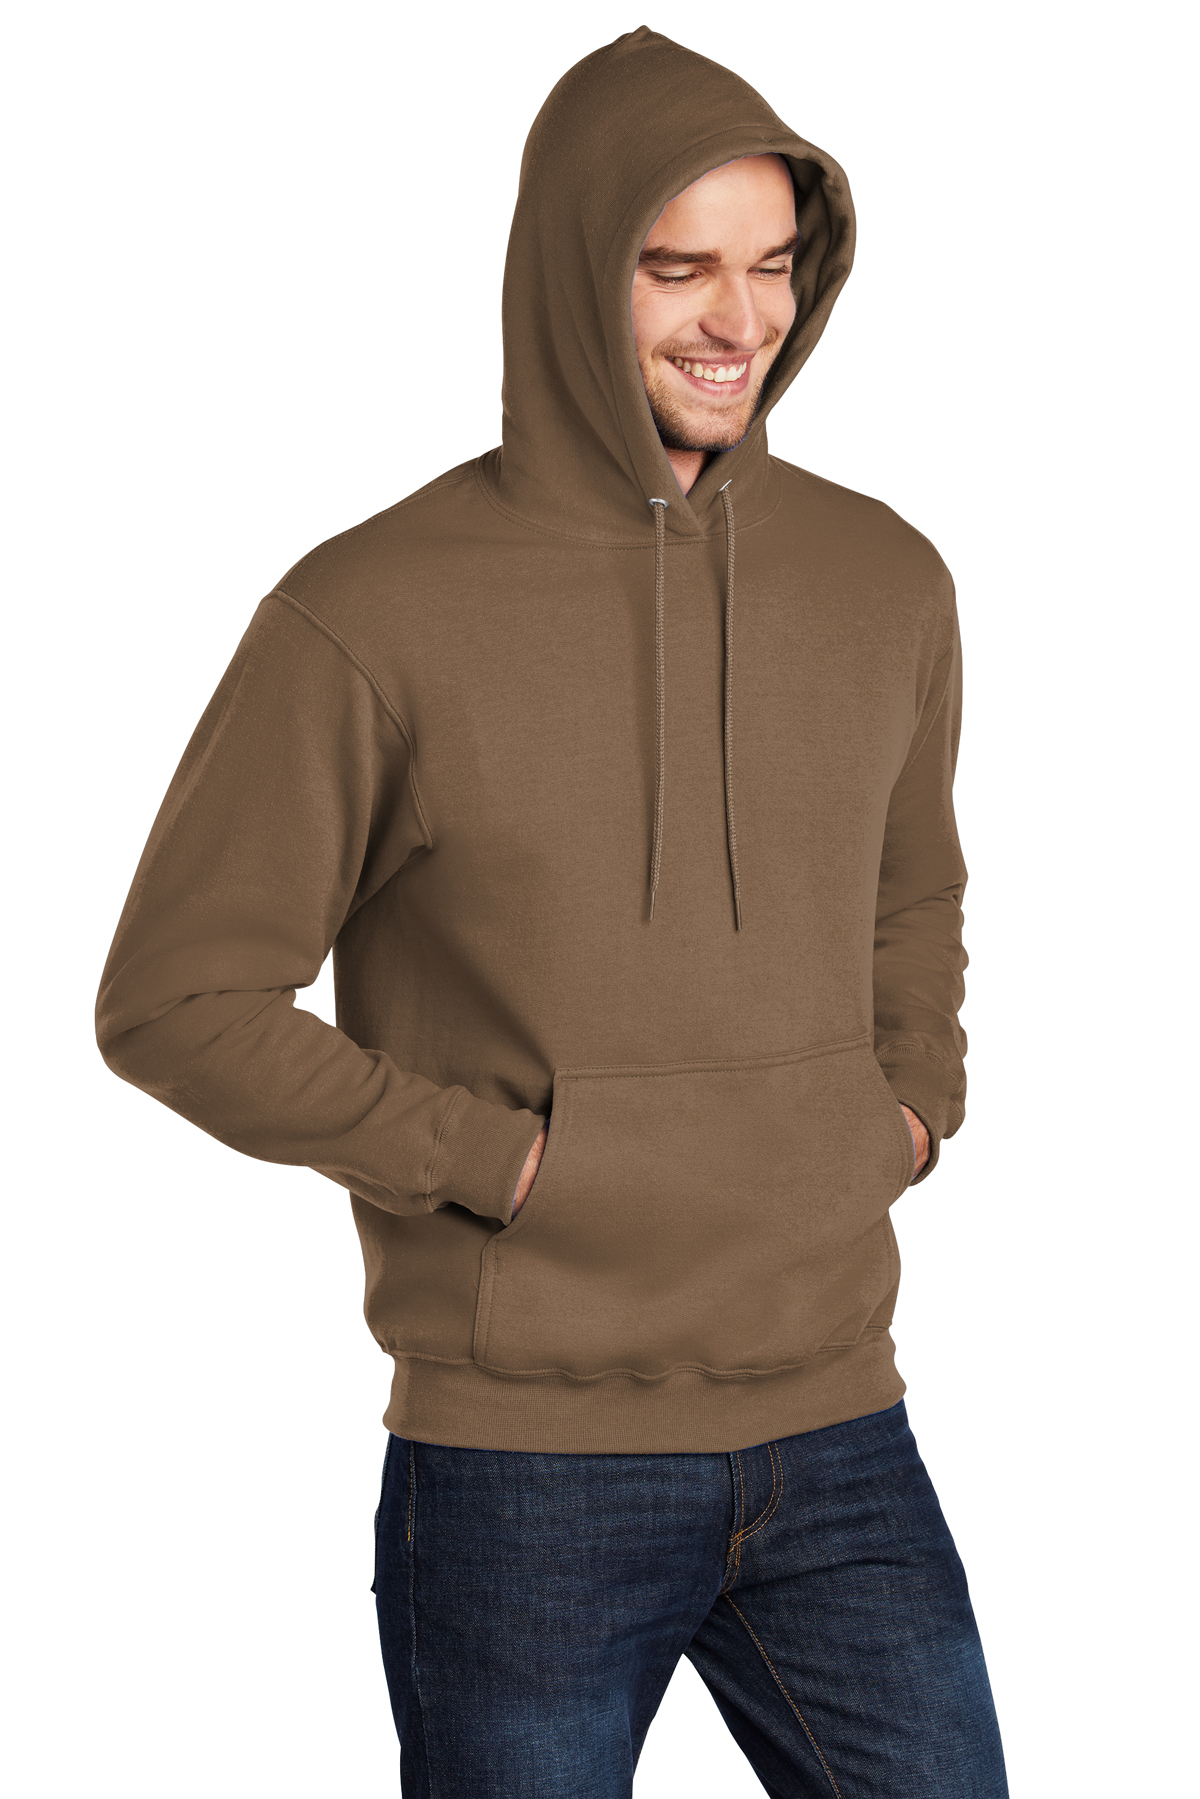 Port & | Company & Pullover Port Sweatshirt | Company Hooded Fleece Core Product